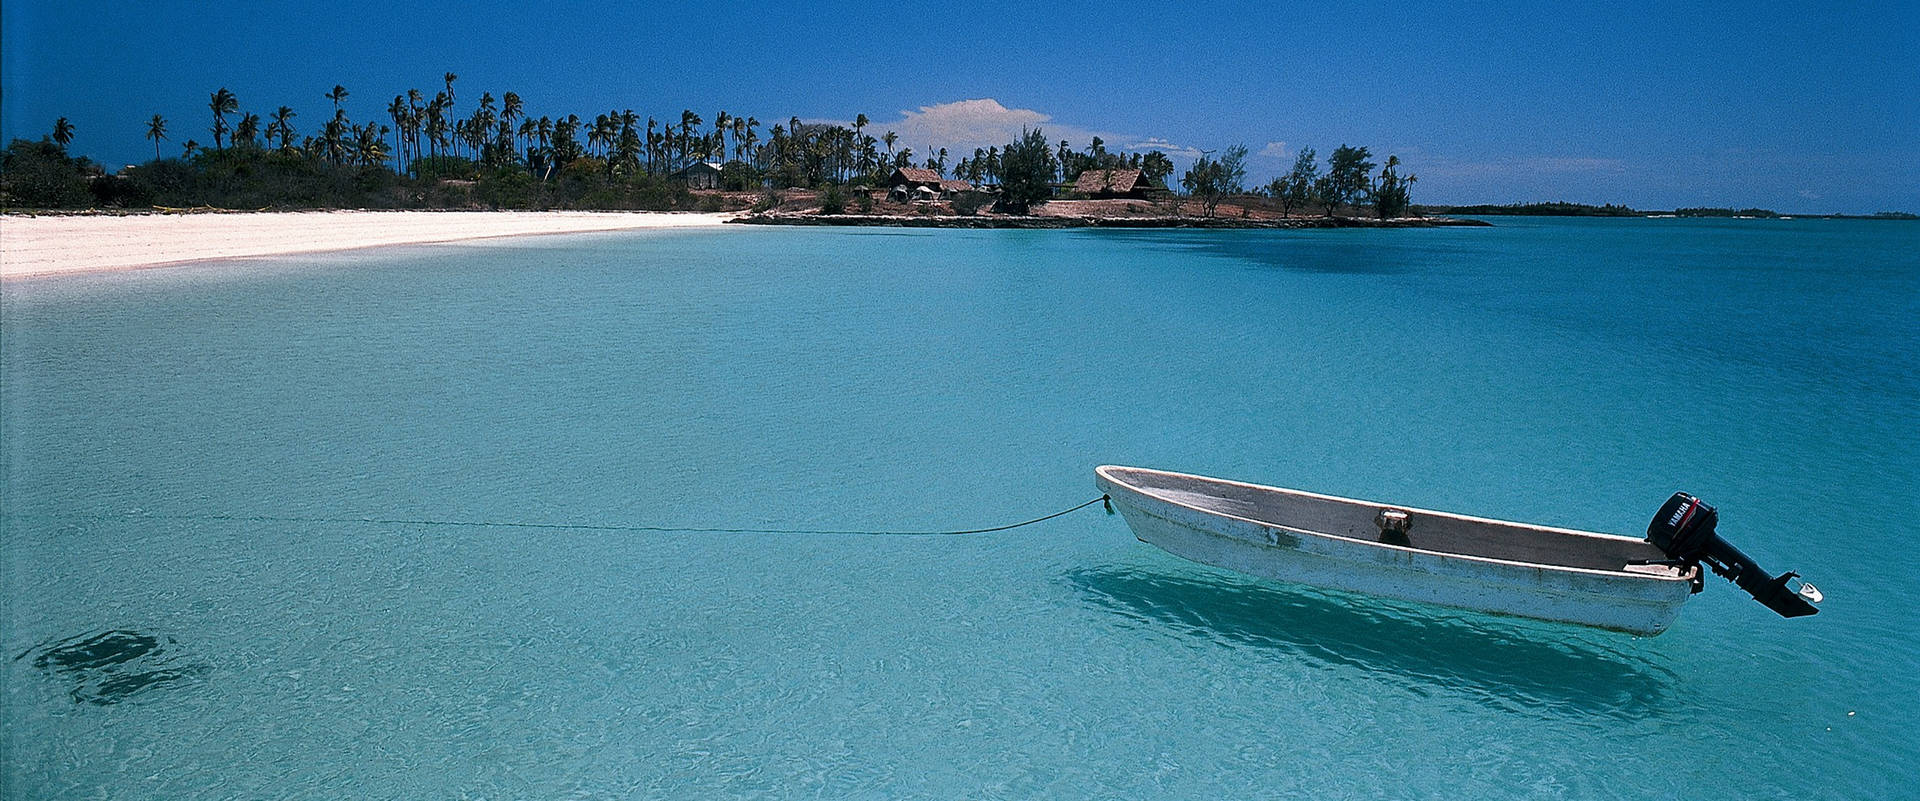 Aguascristalinas De La Playa De Mozambique. Fondo de pantalla